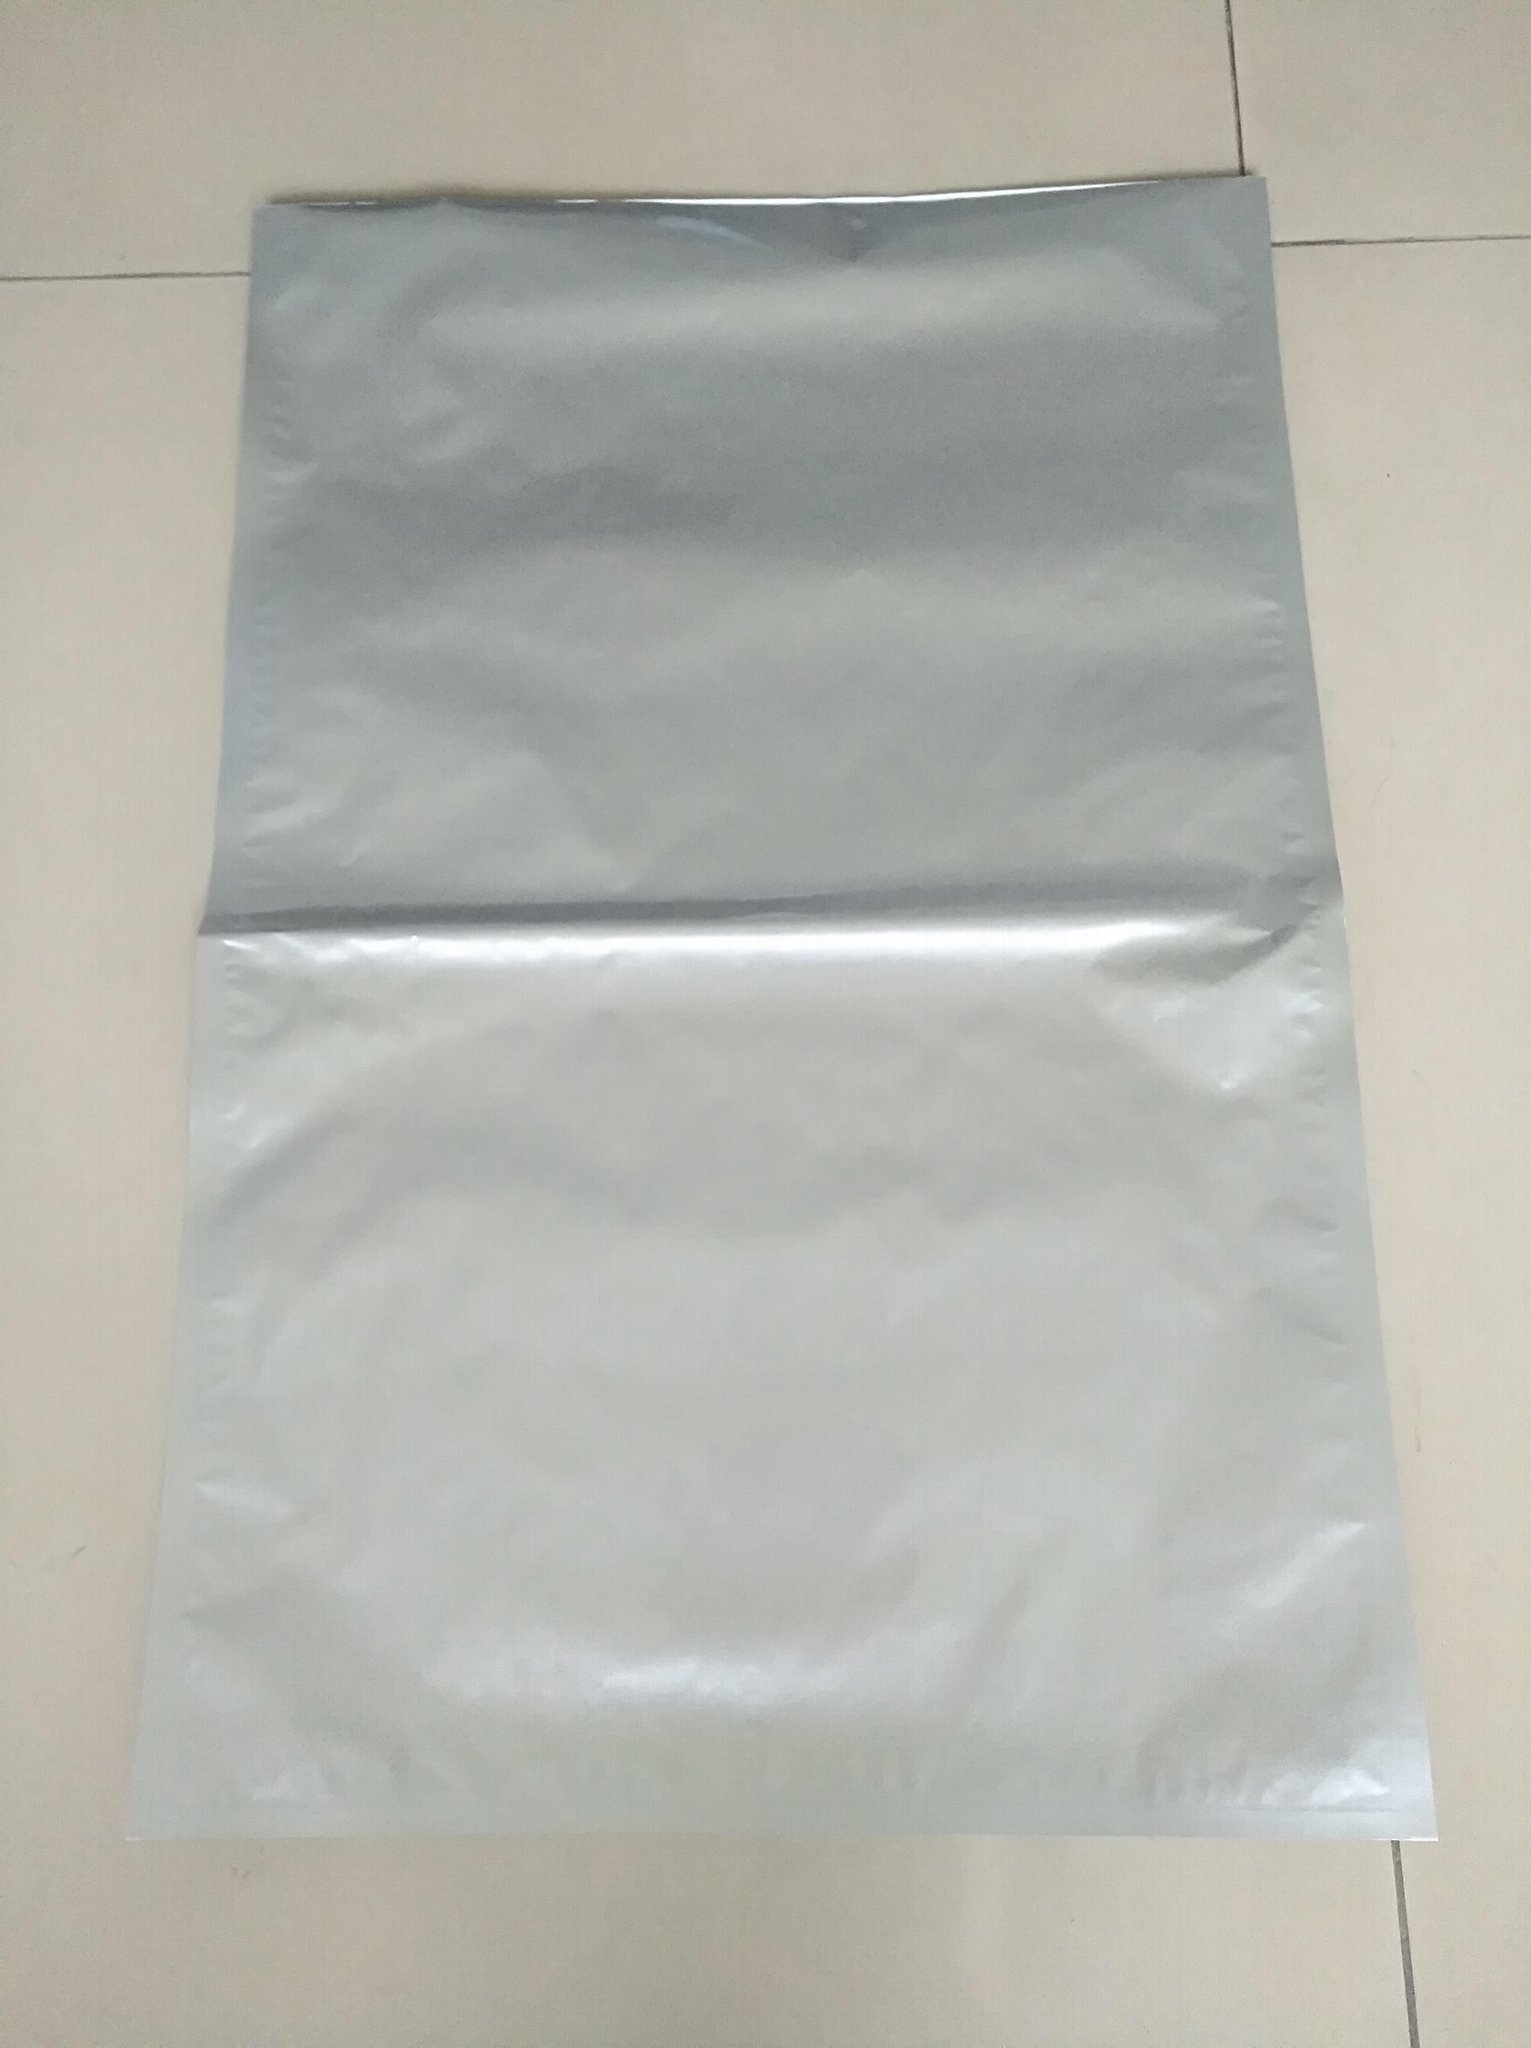 Wholesale Heat sealed moisture barrier foil bags 5